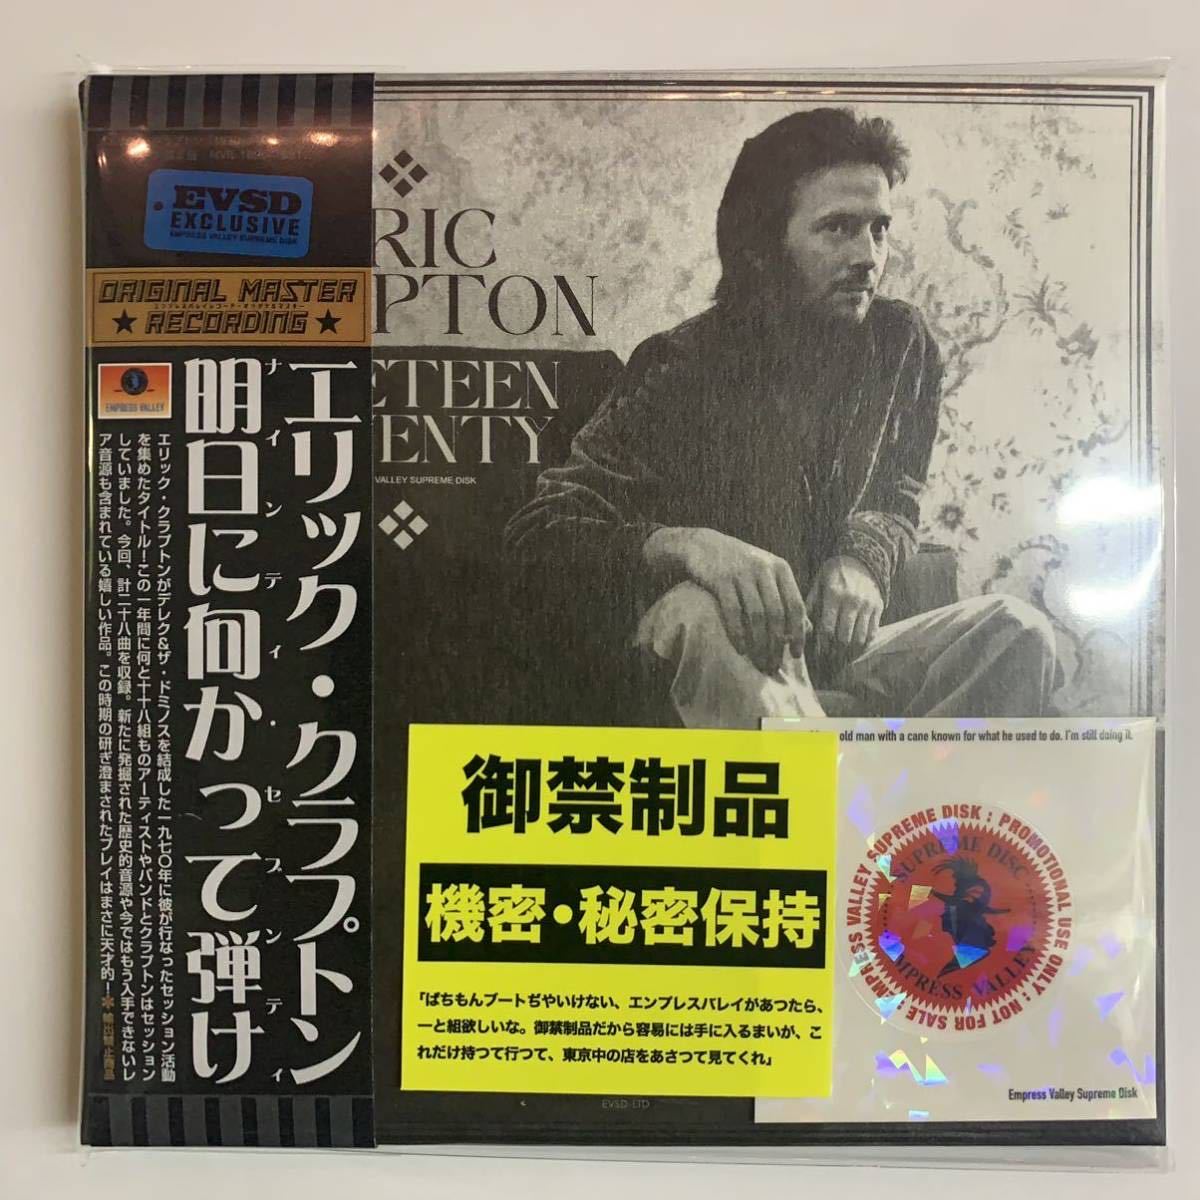 Eric Clapton – Music Lover Japan